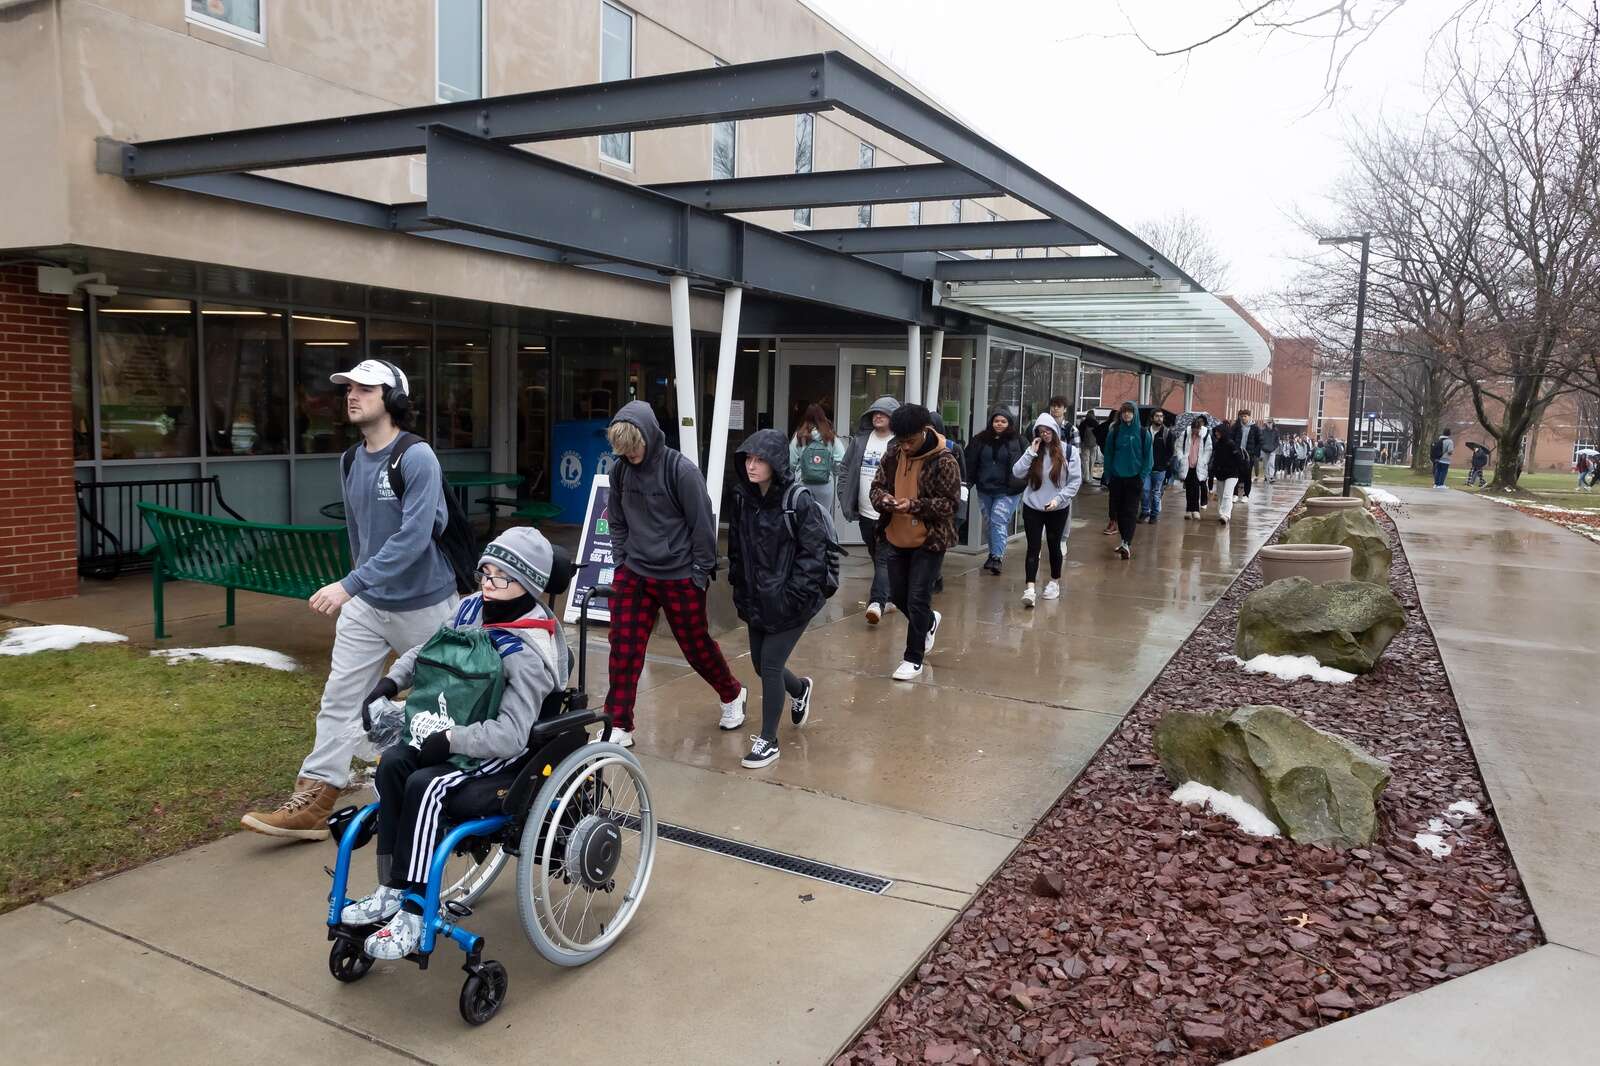 Students walk through campus at Slippery Rock University